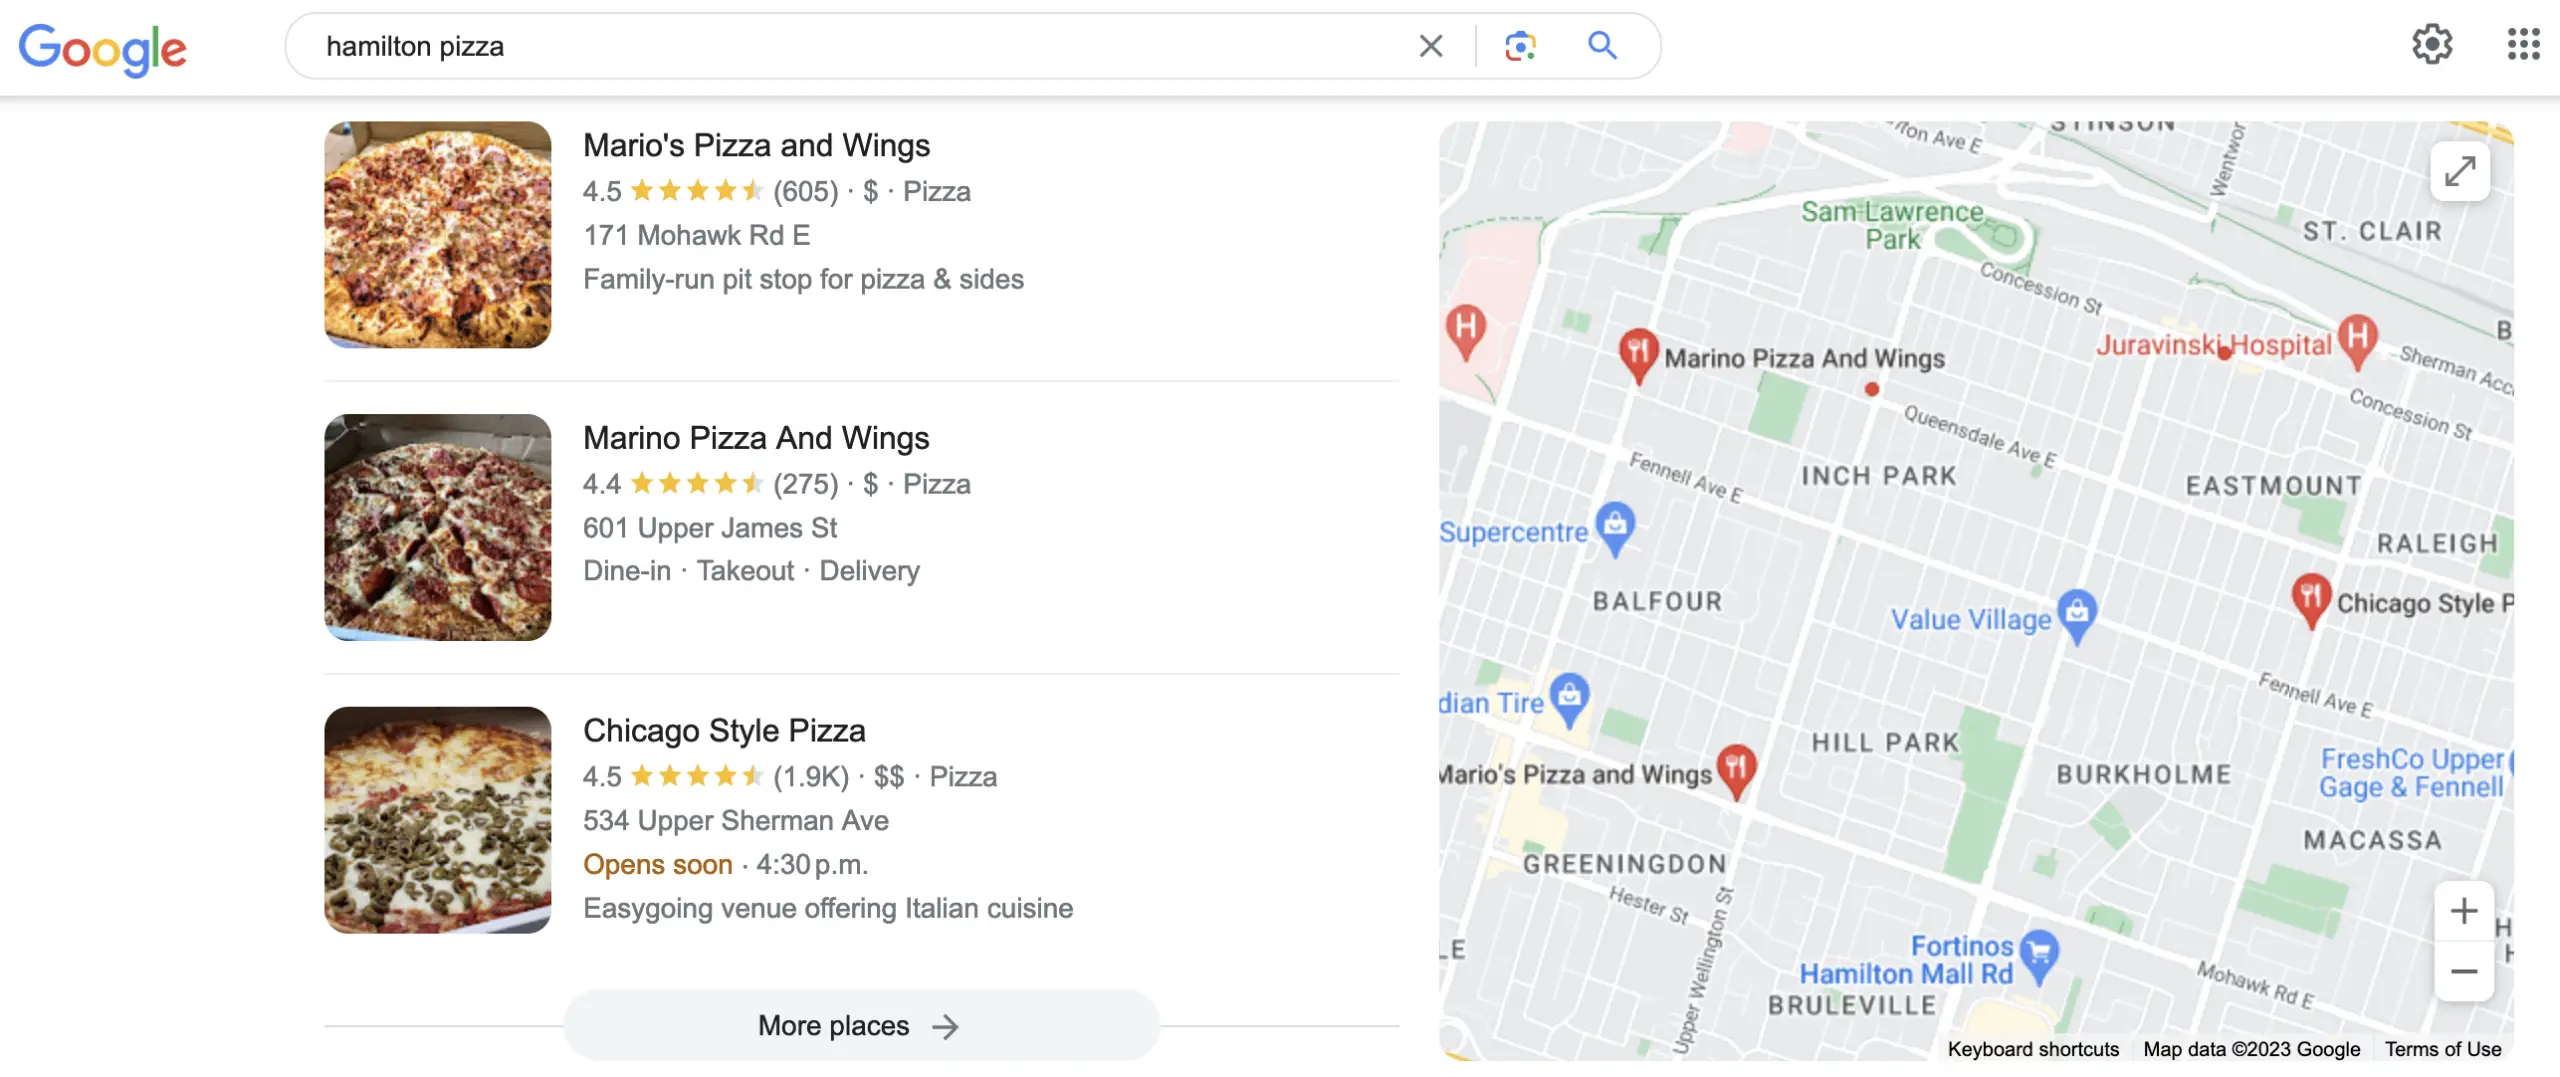 Google Maps listings for Hamilton pizza